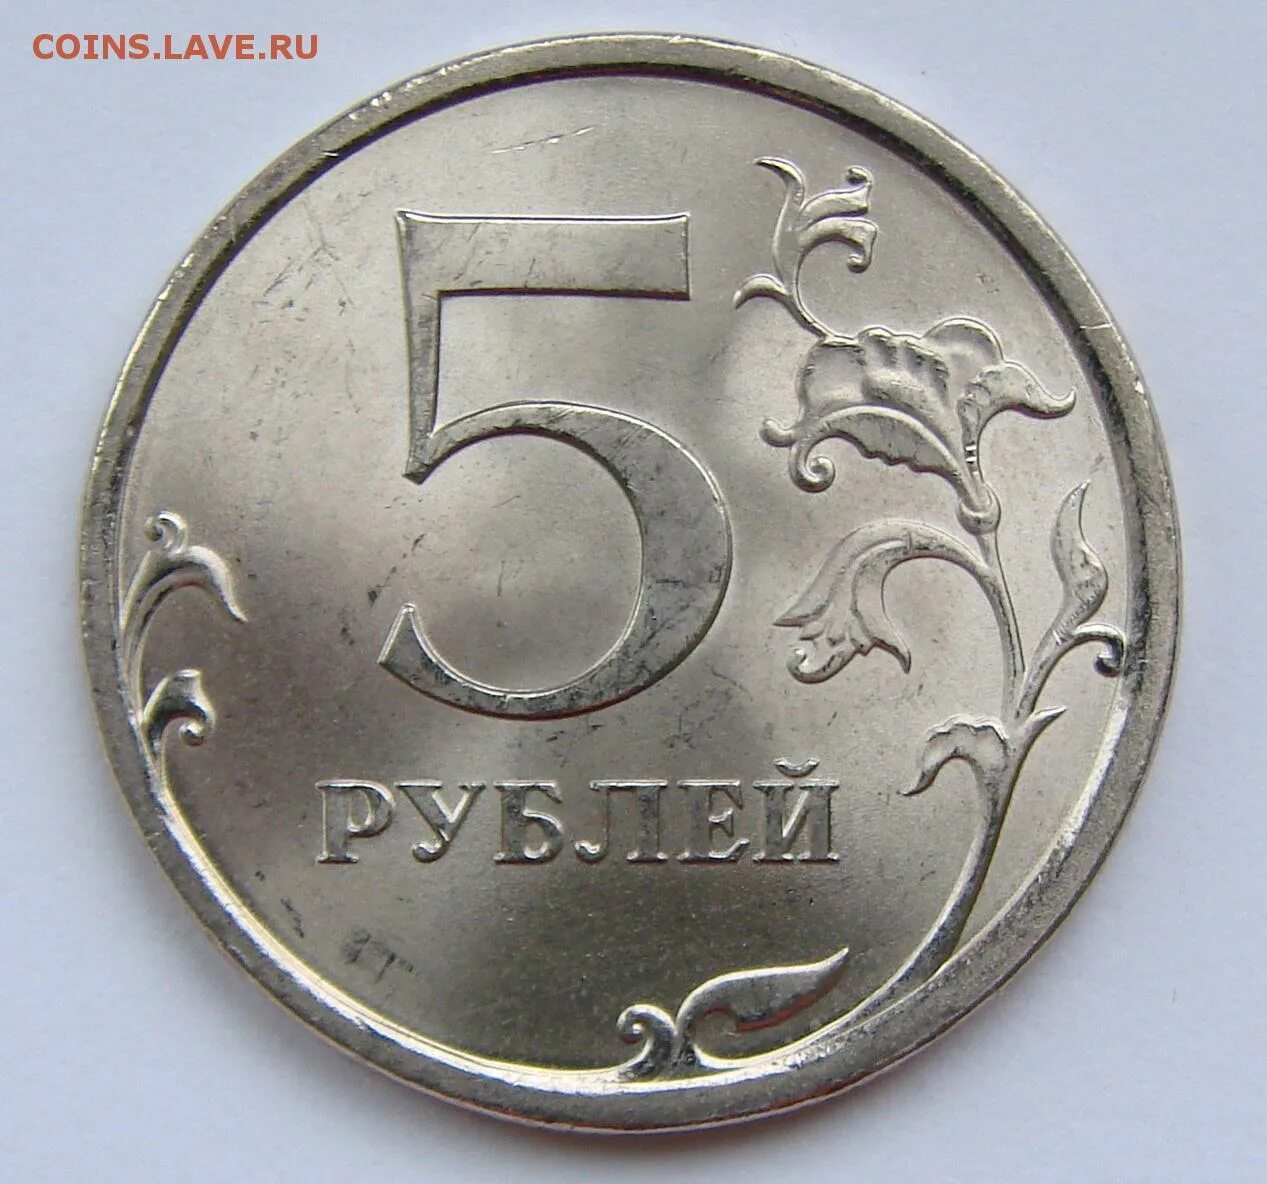 5 рублей 16 года. 5 Рублей 2009 СПМД немагнитная. 5 Рублей 2009 СПМД. 2009 Год 5 рублей вес.